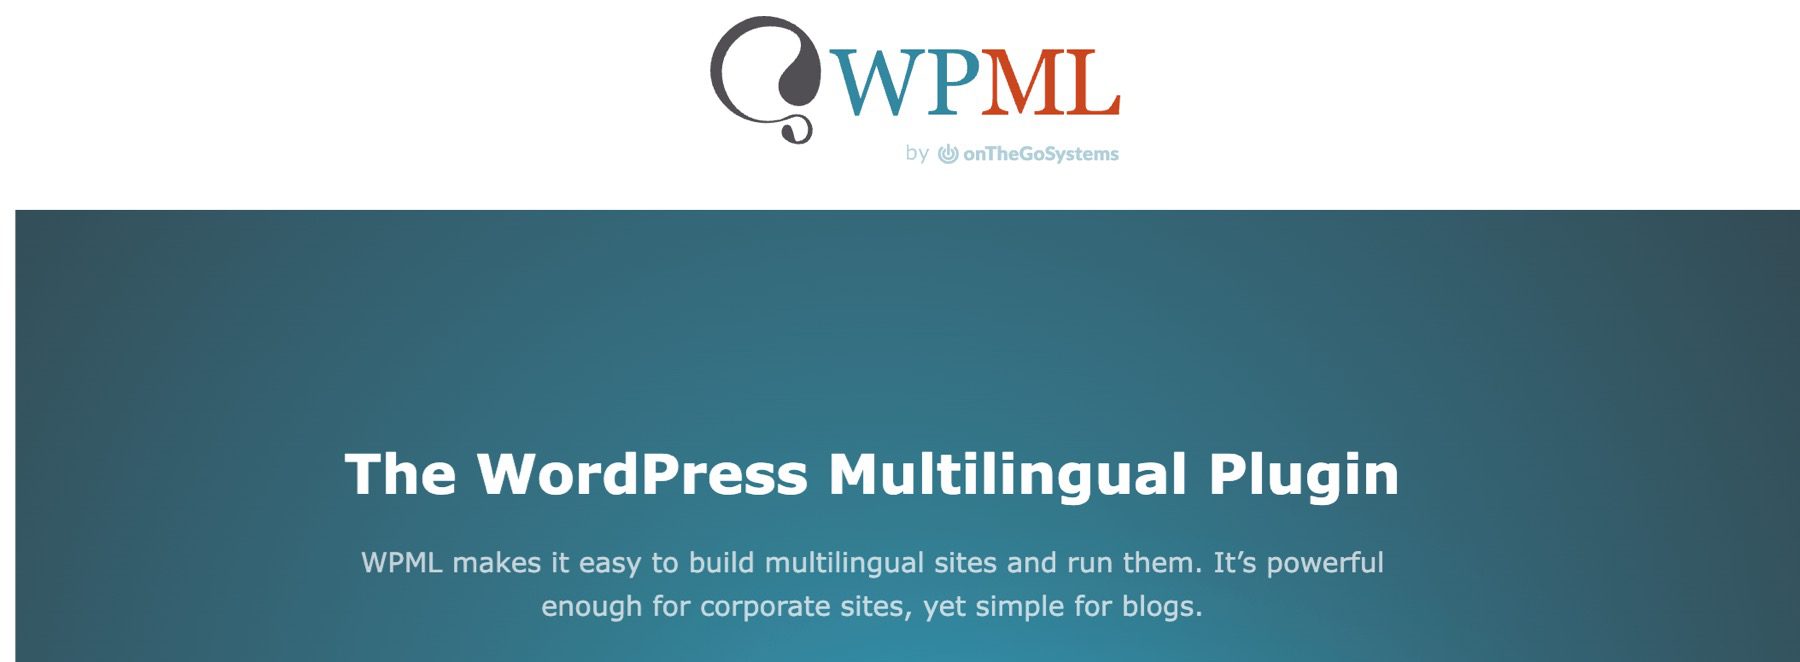 WPML website logo